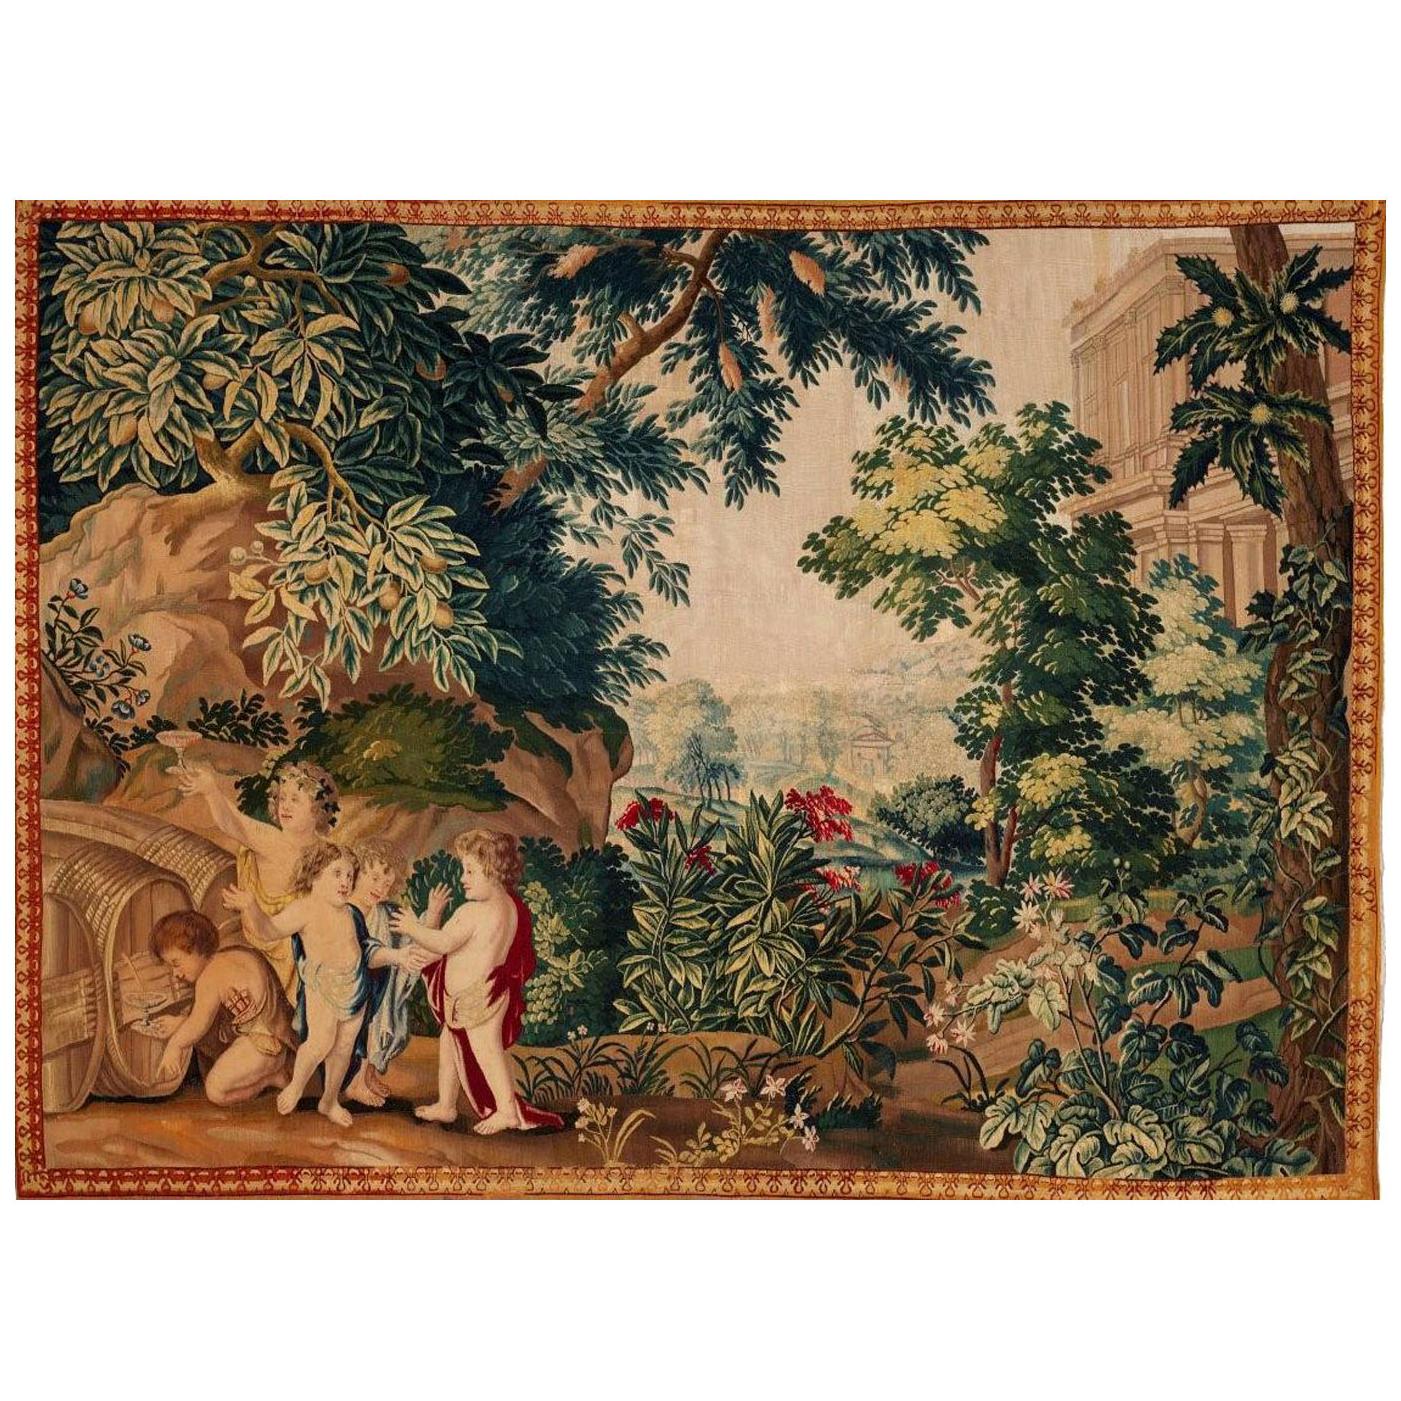 Brüsseler Bacchanale-Wandteppich aus dem 18. Jahrhundert, um 1760, 2,13 m x 2,13 m